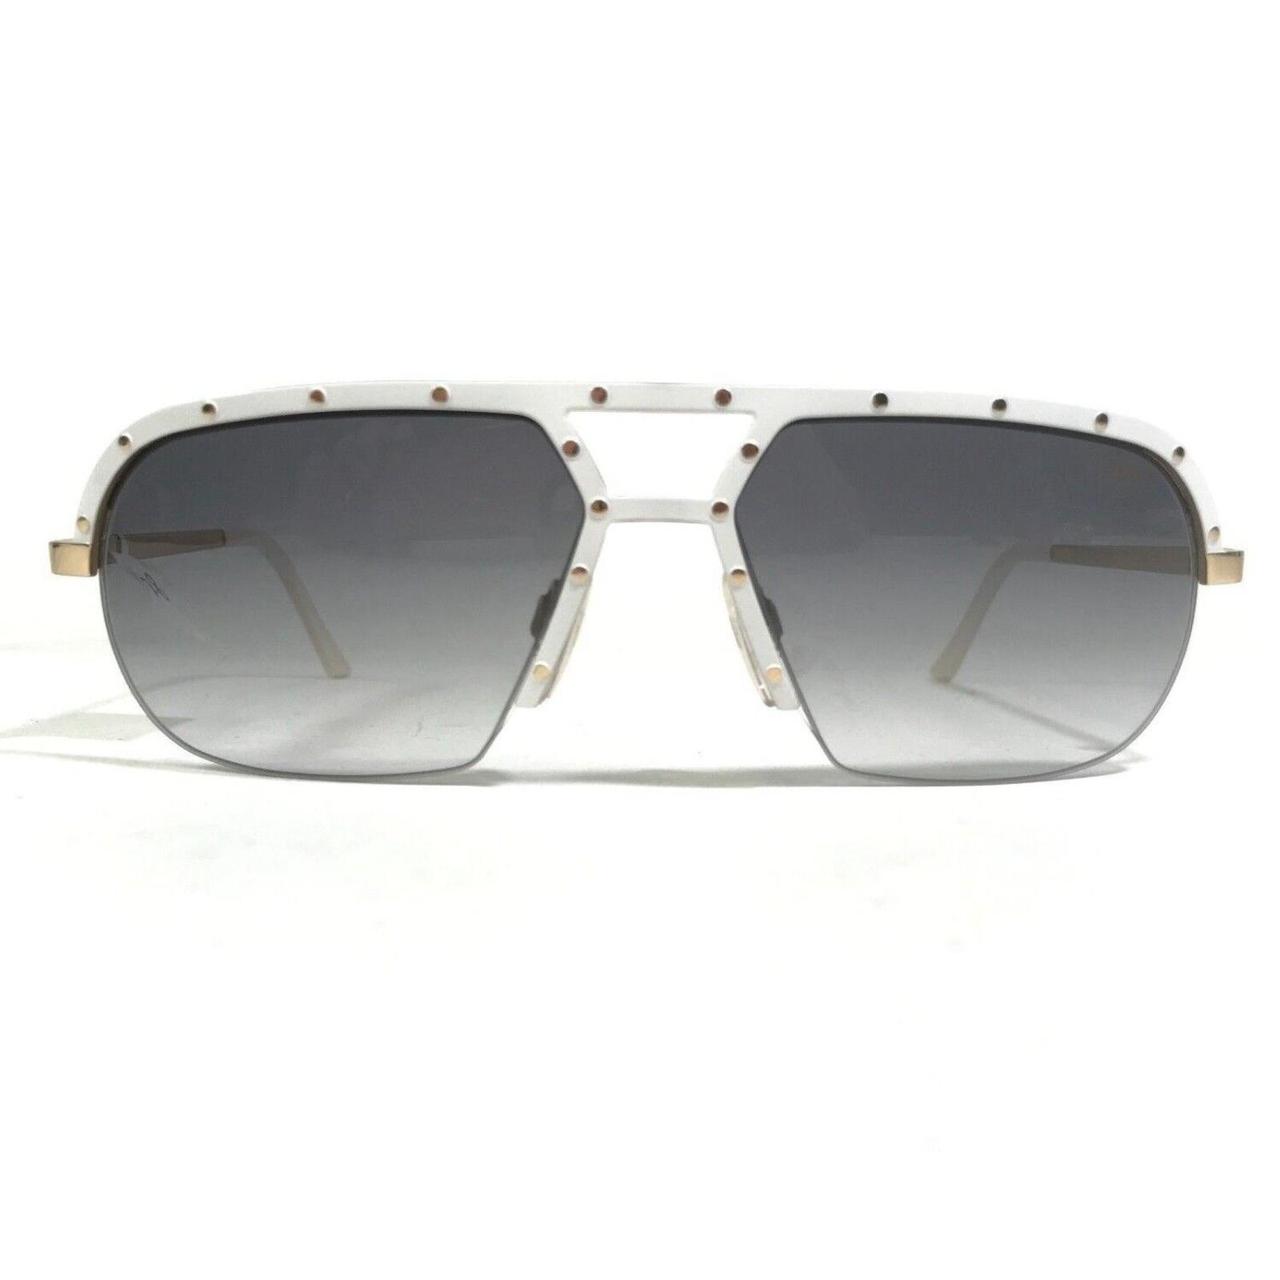 Product Image 1 - Cazal Sunglasses MOD.90280 COL.002 Gold